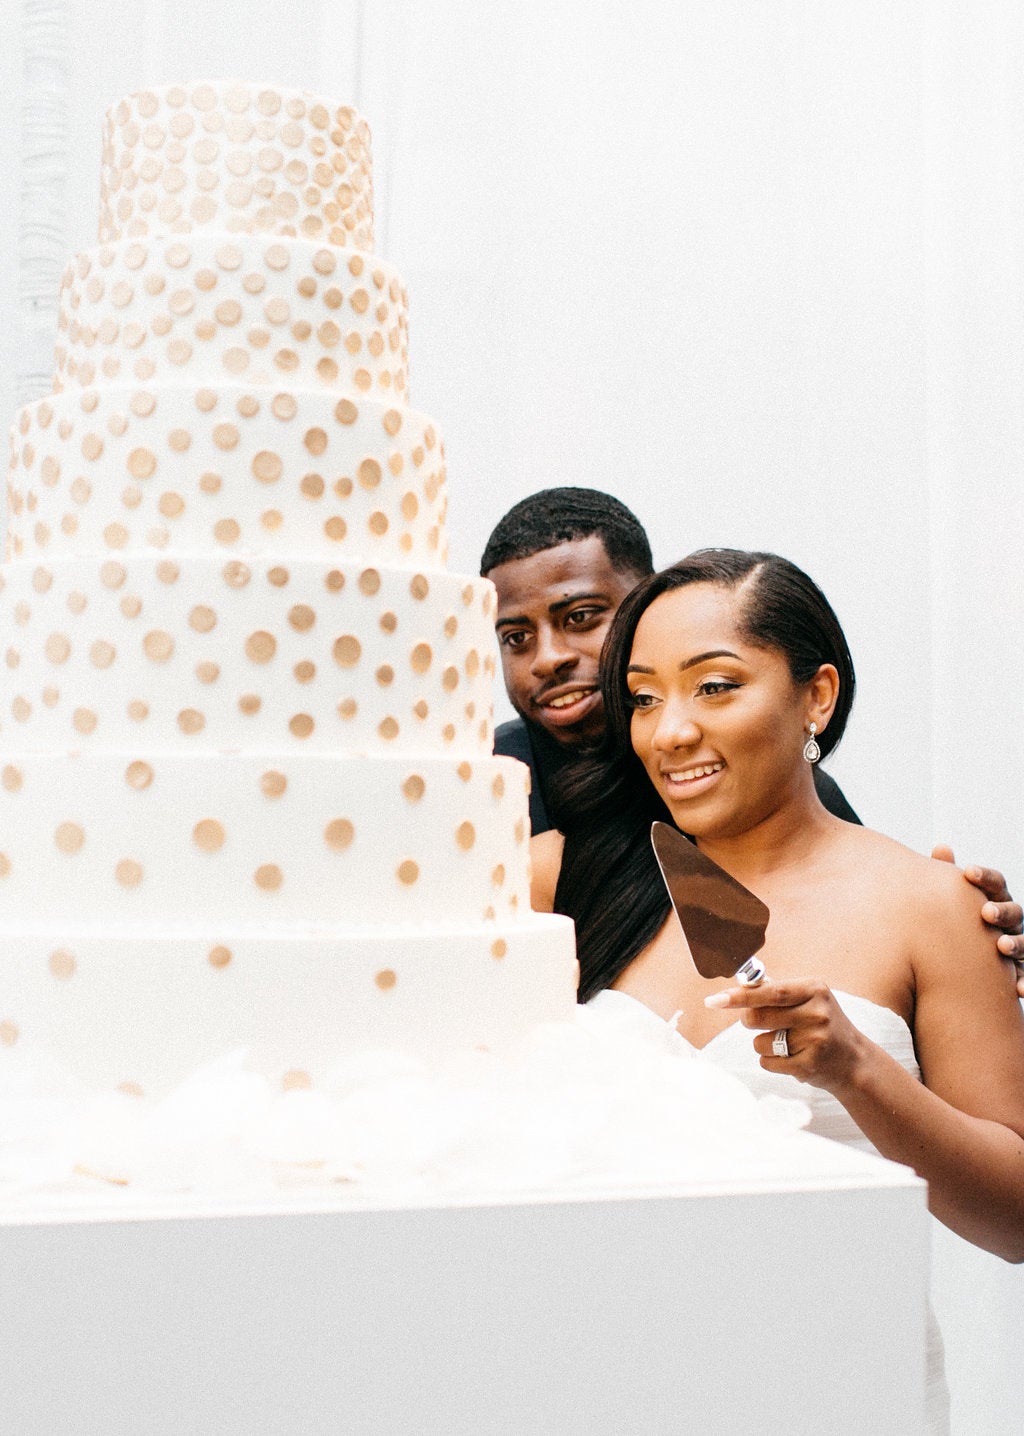 Bridal Bliss: Chris and Kierra's Dallas Wedding Was A Whimsical Dream Come True
